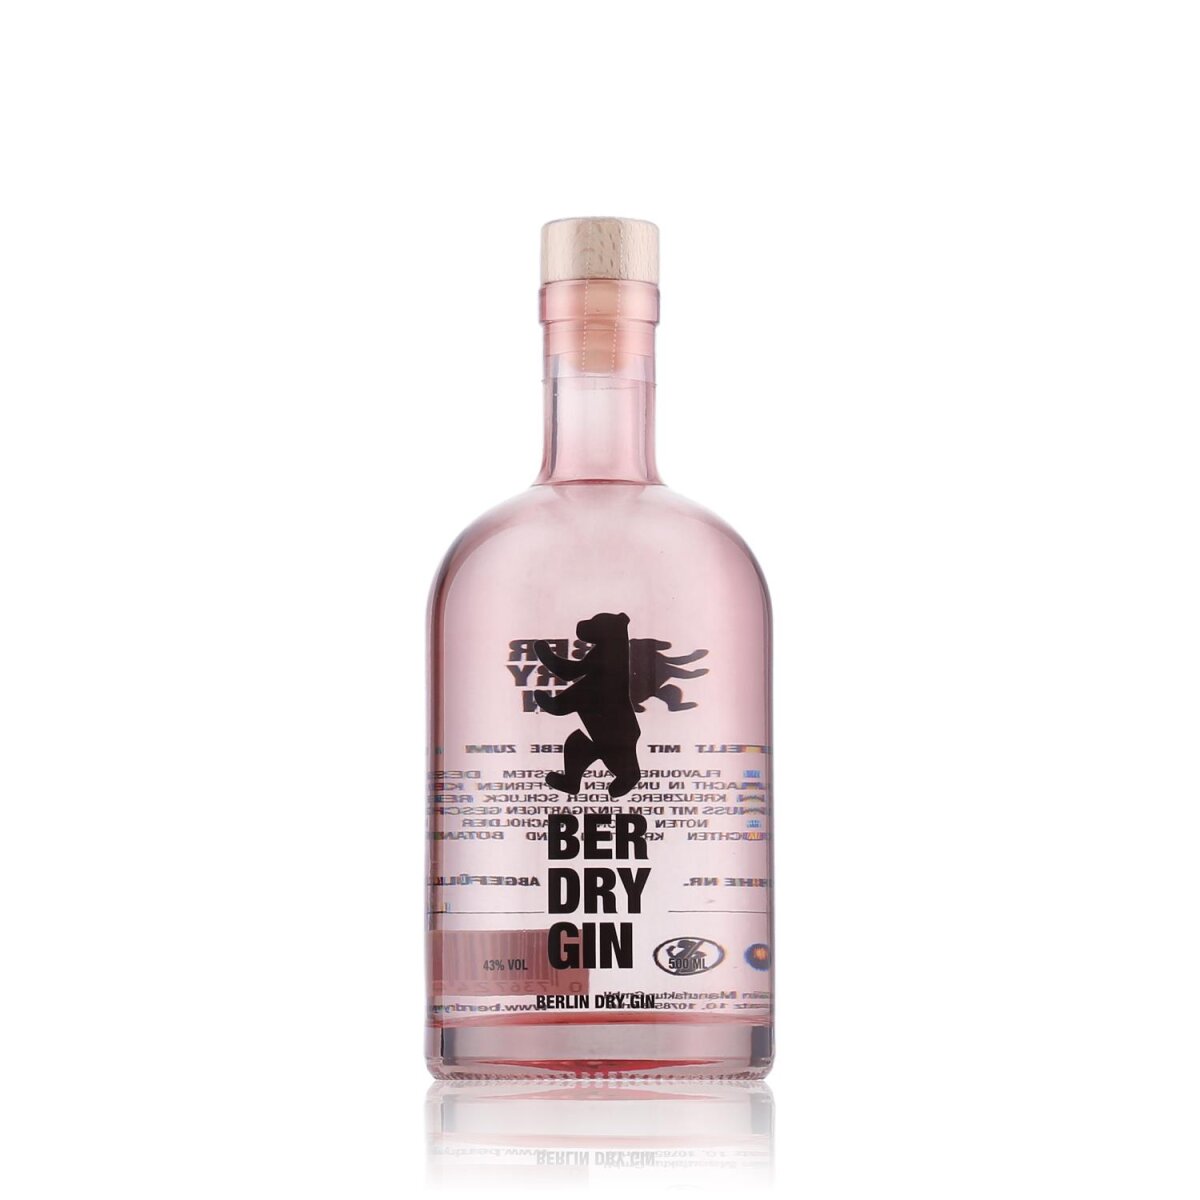 22,99 € Dry 0,5l, BER Gin